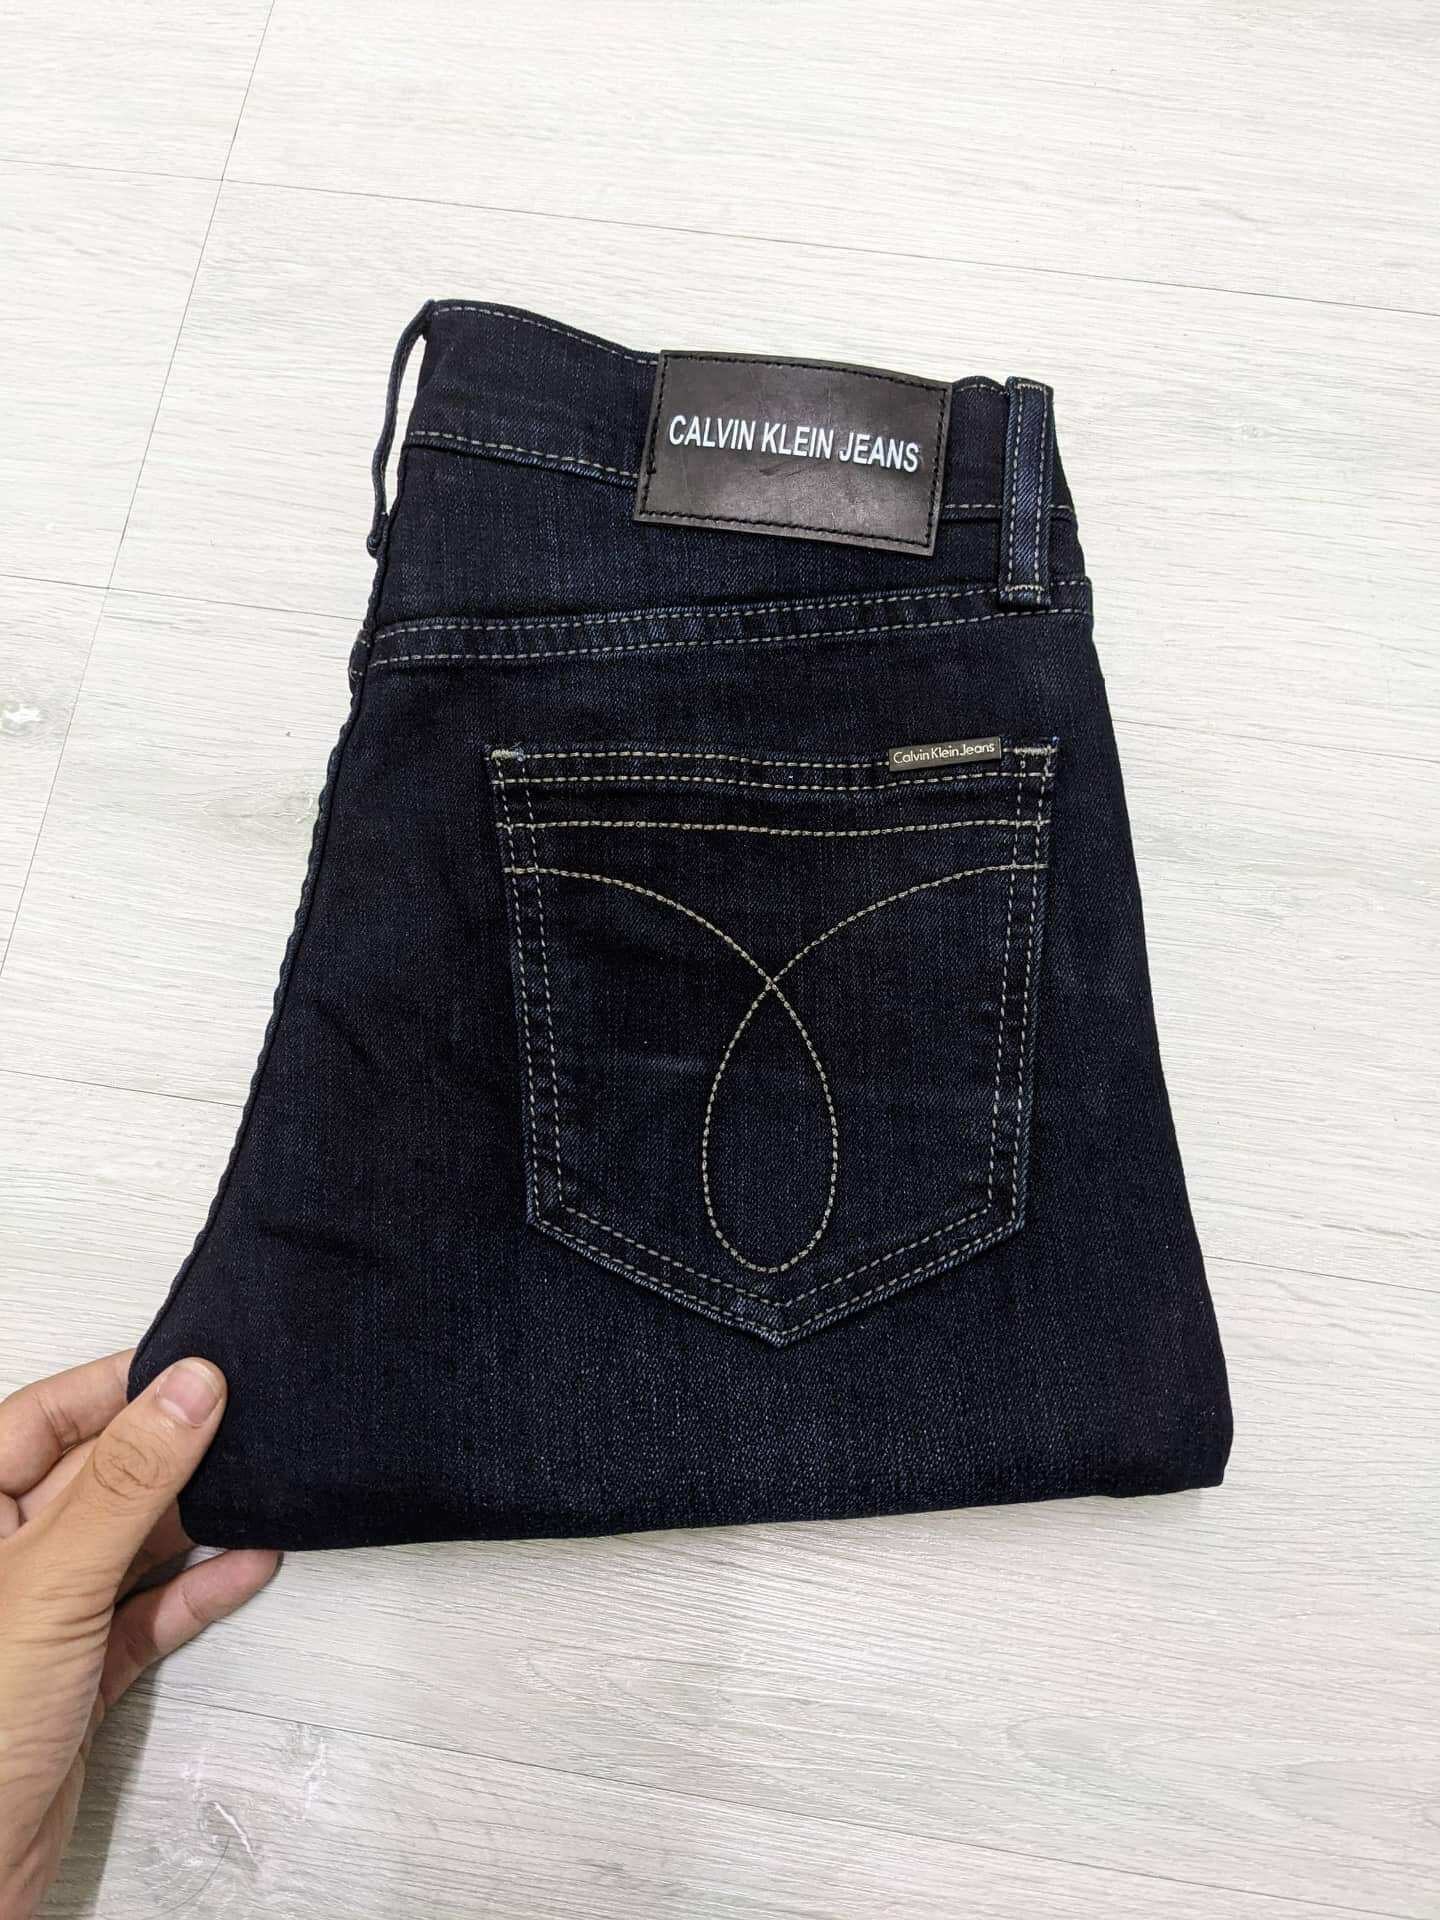 Introducir 38+ imagen calvin klein jeans quality